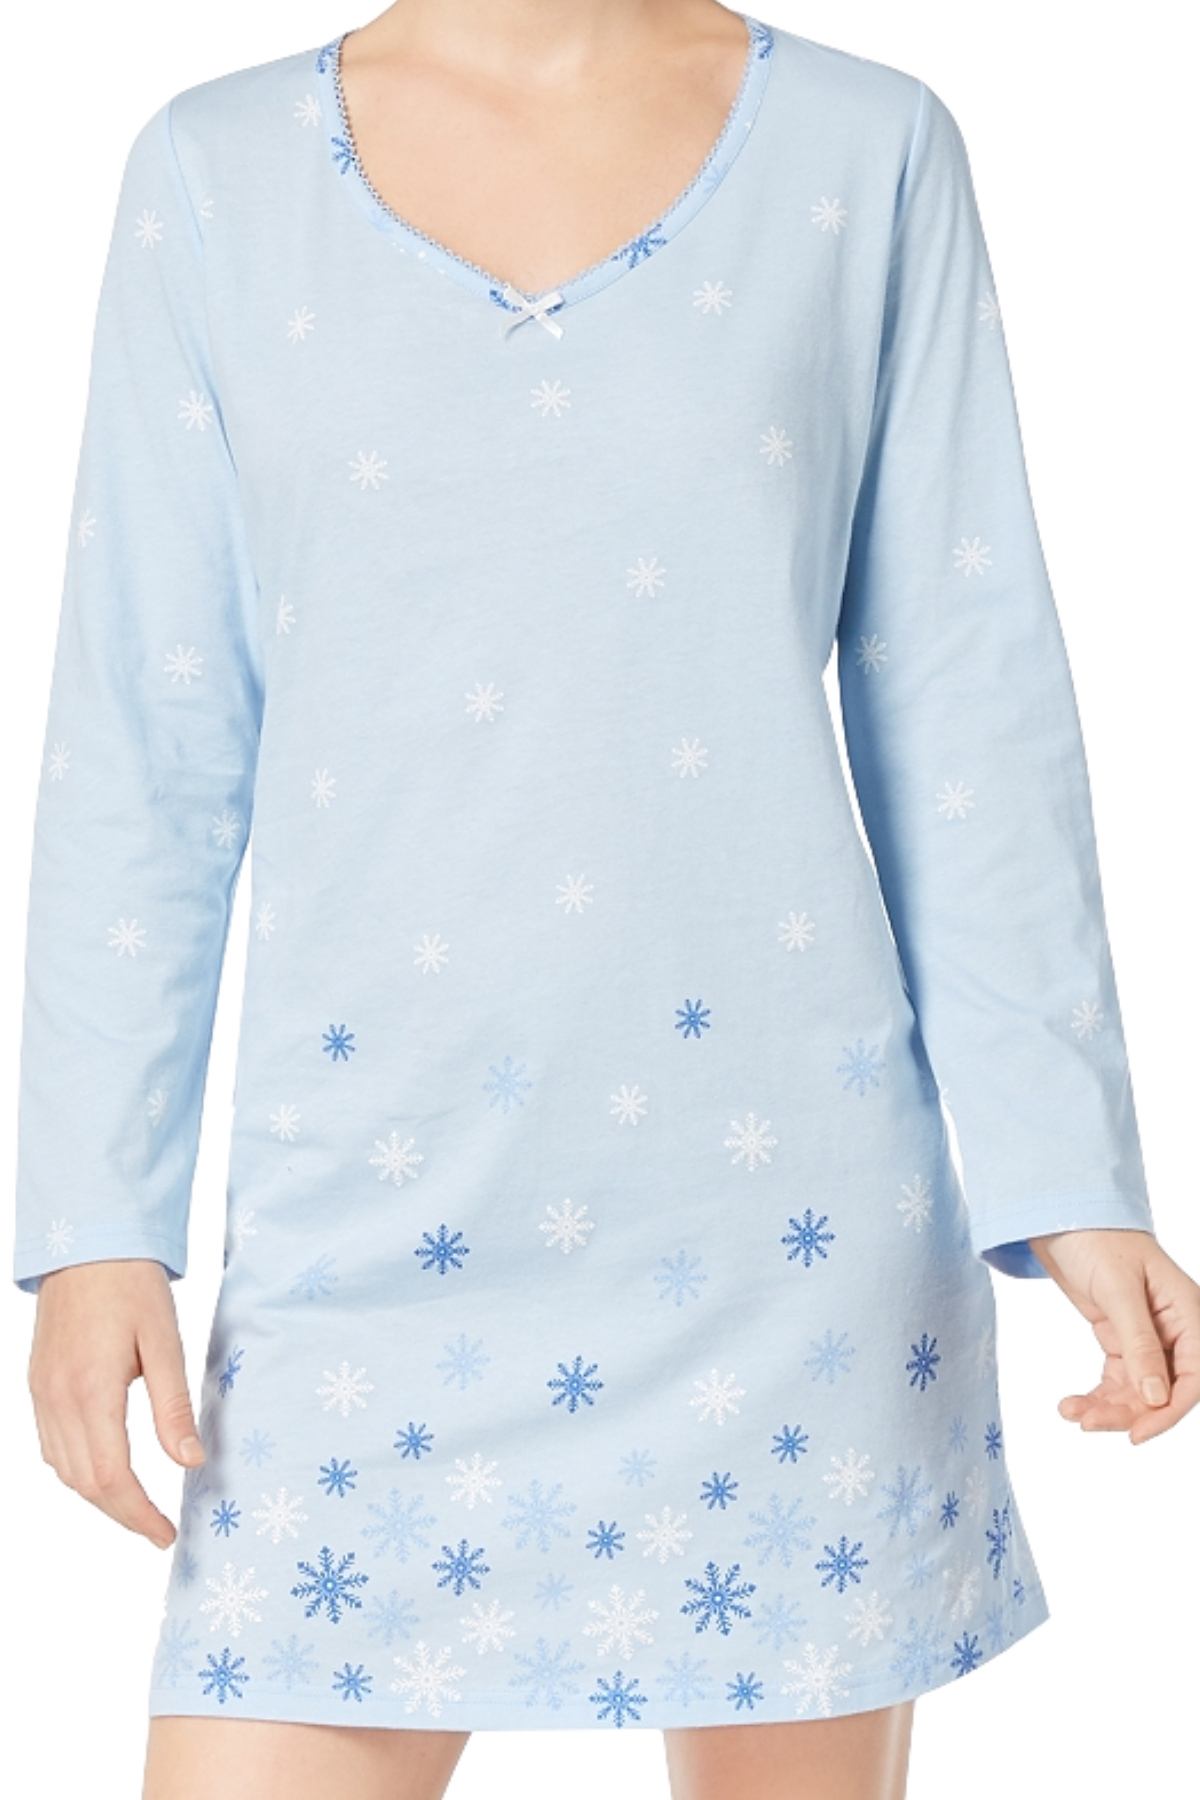 Charter Club Intimates Blue Snowflake Graphic-Print Cotton Sleepshirt